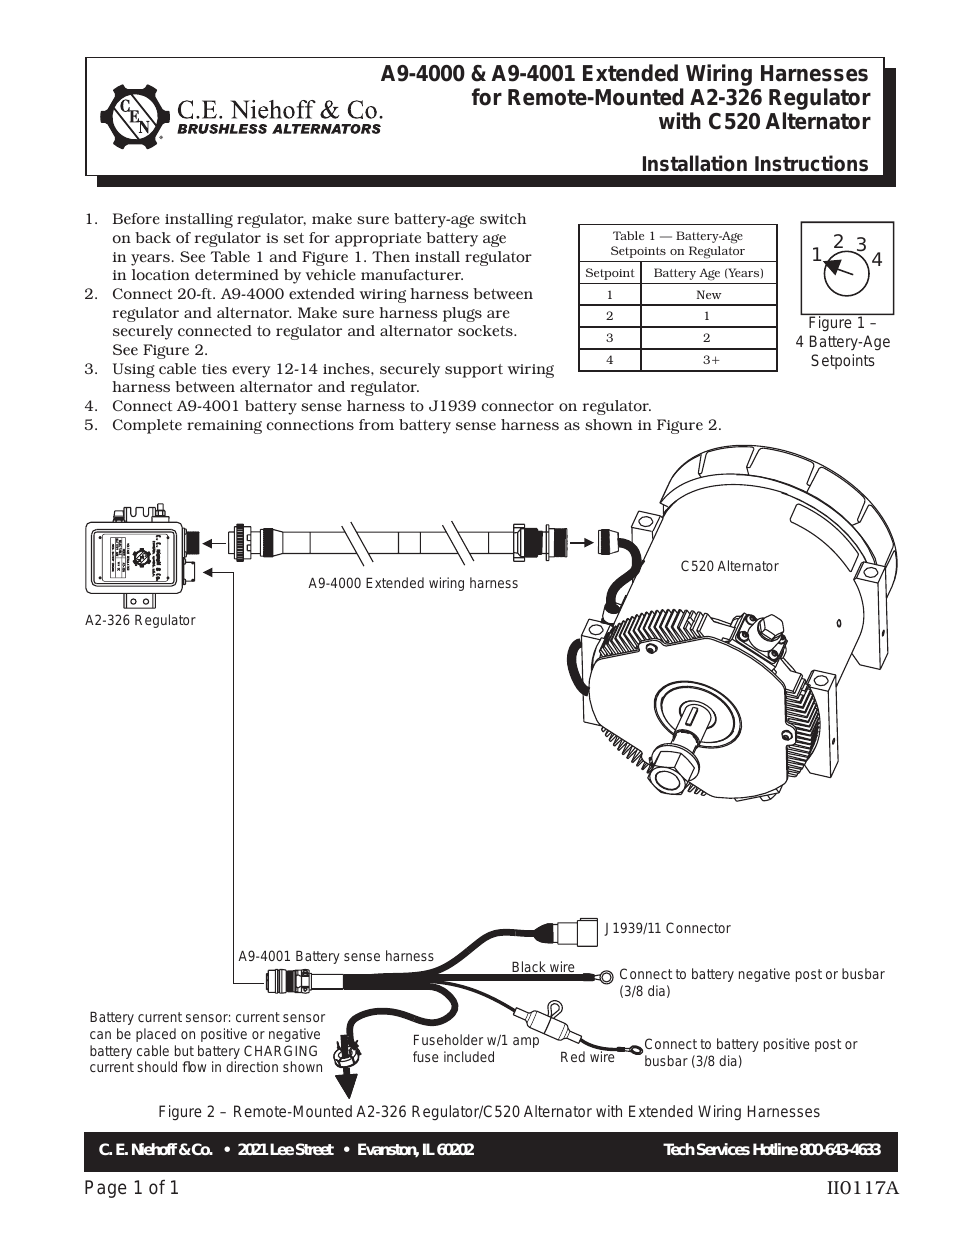 C520 Alternator/A2-326 Regulator w/Extended Wiring Harnesses Installation